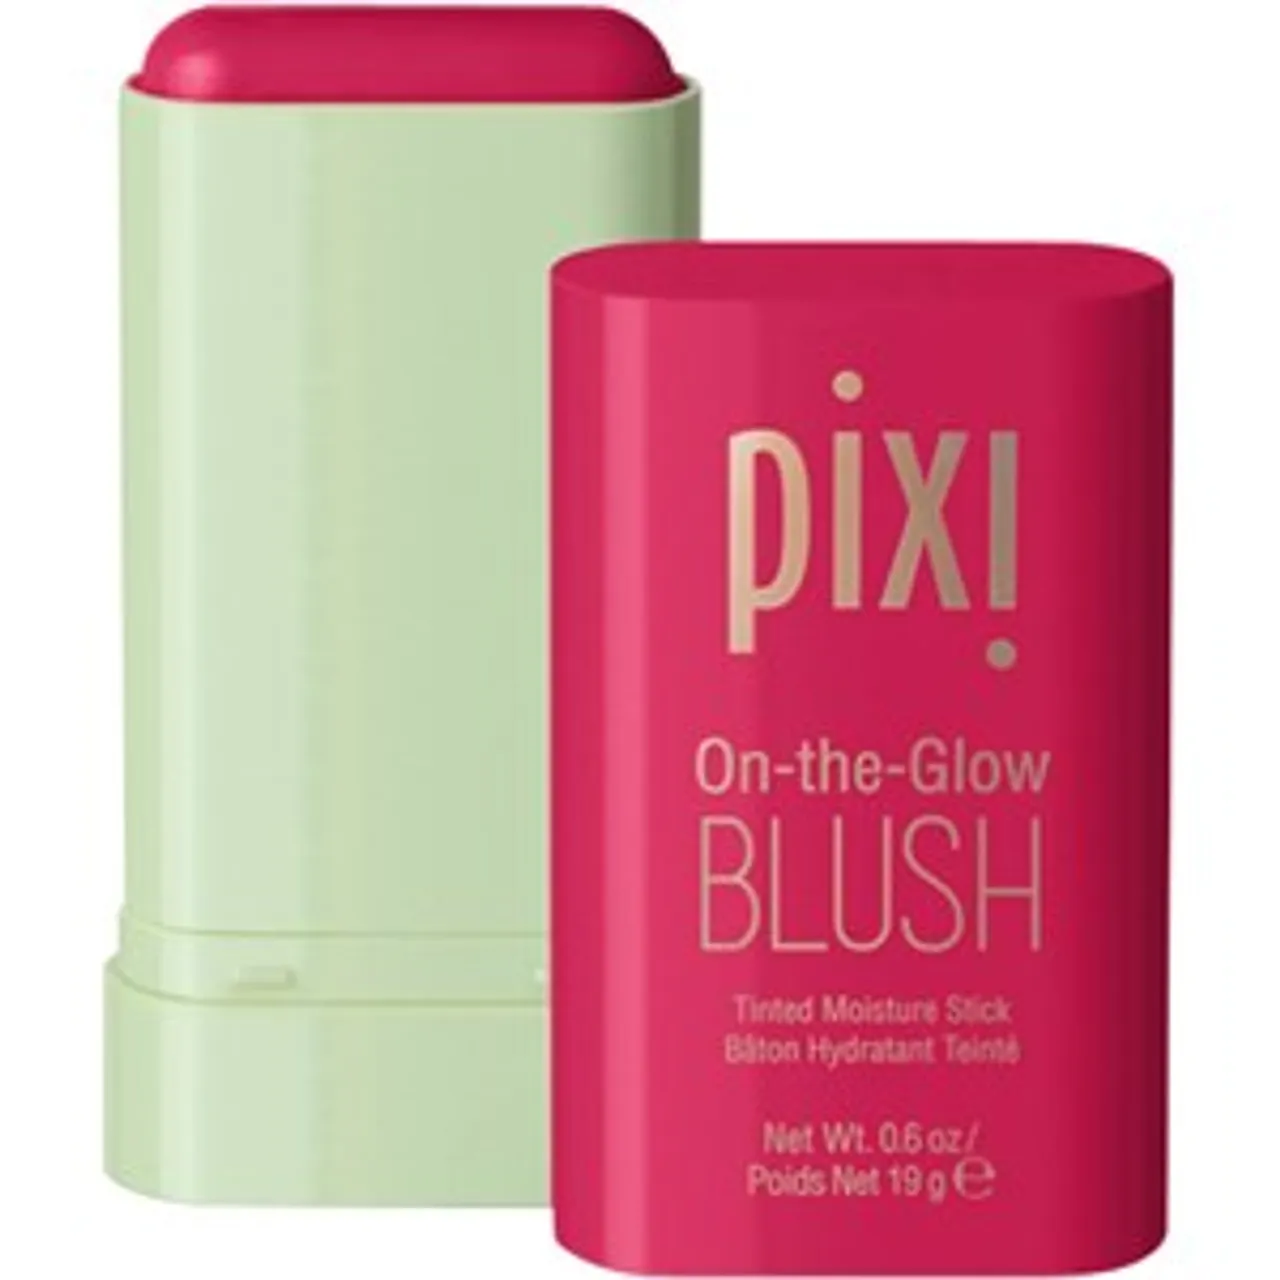 Pixi On The Glow Blush Female 19 g